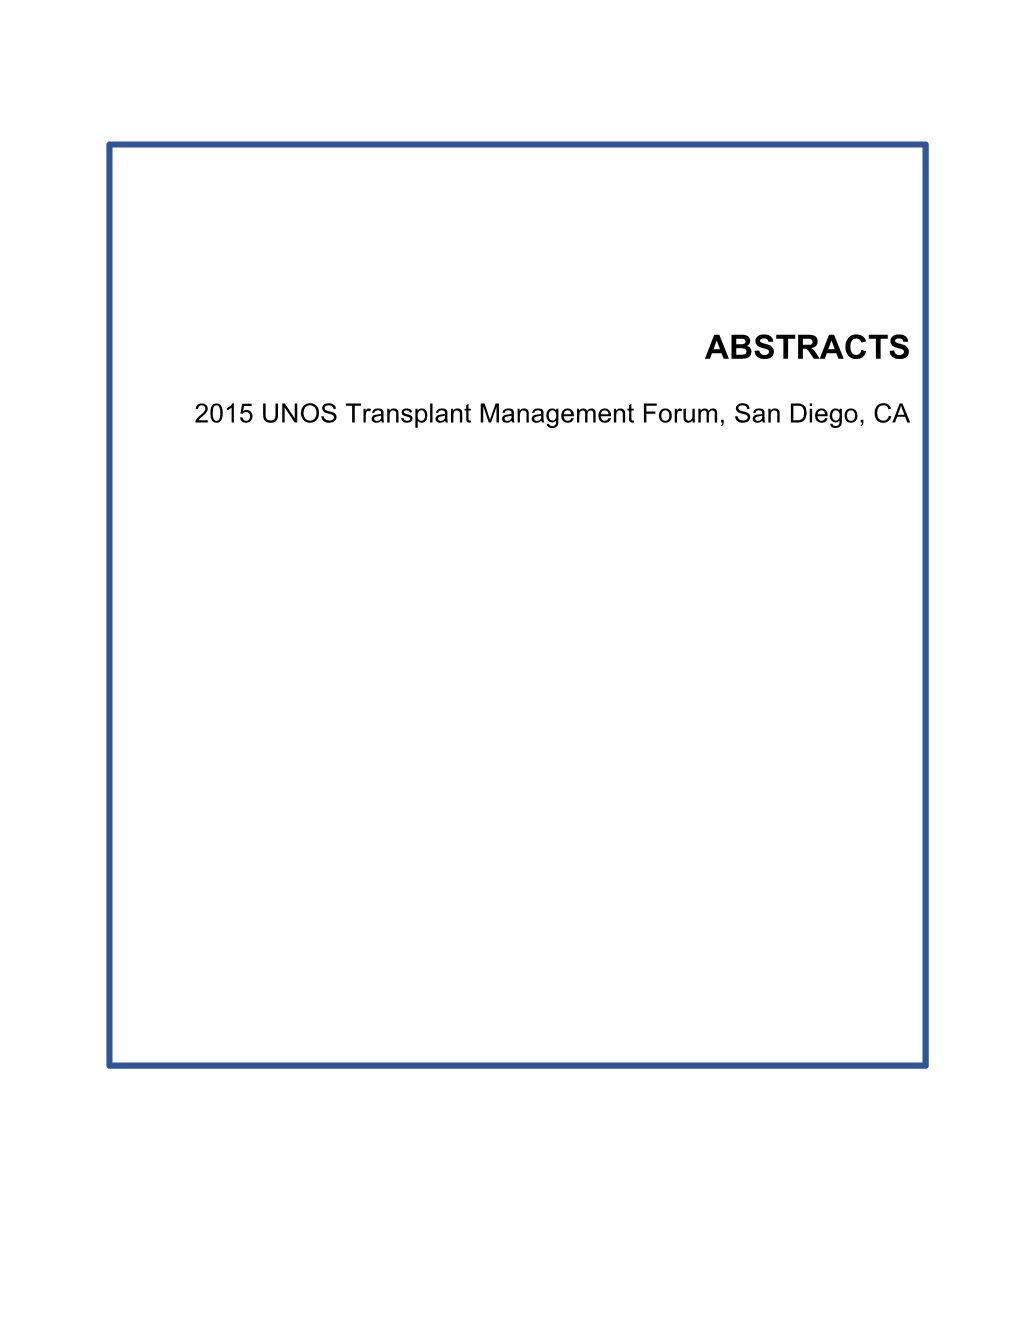 2015 UNOS Transplant Mangement Forum Abstracts